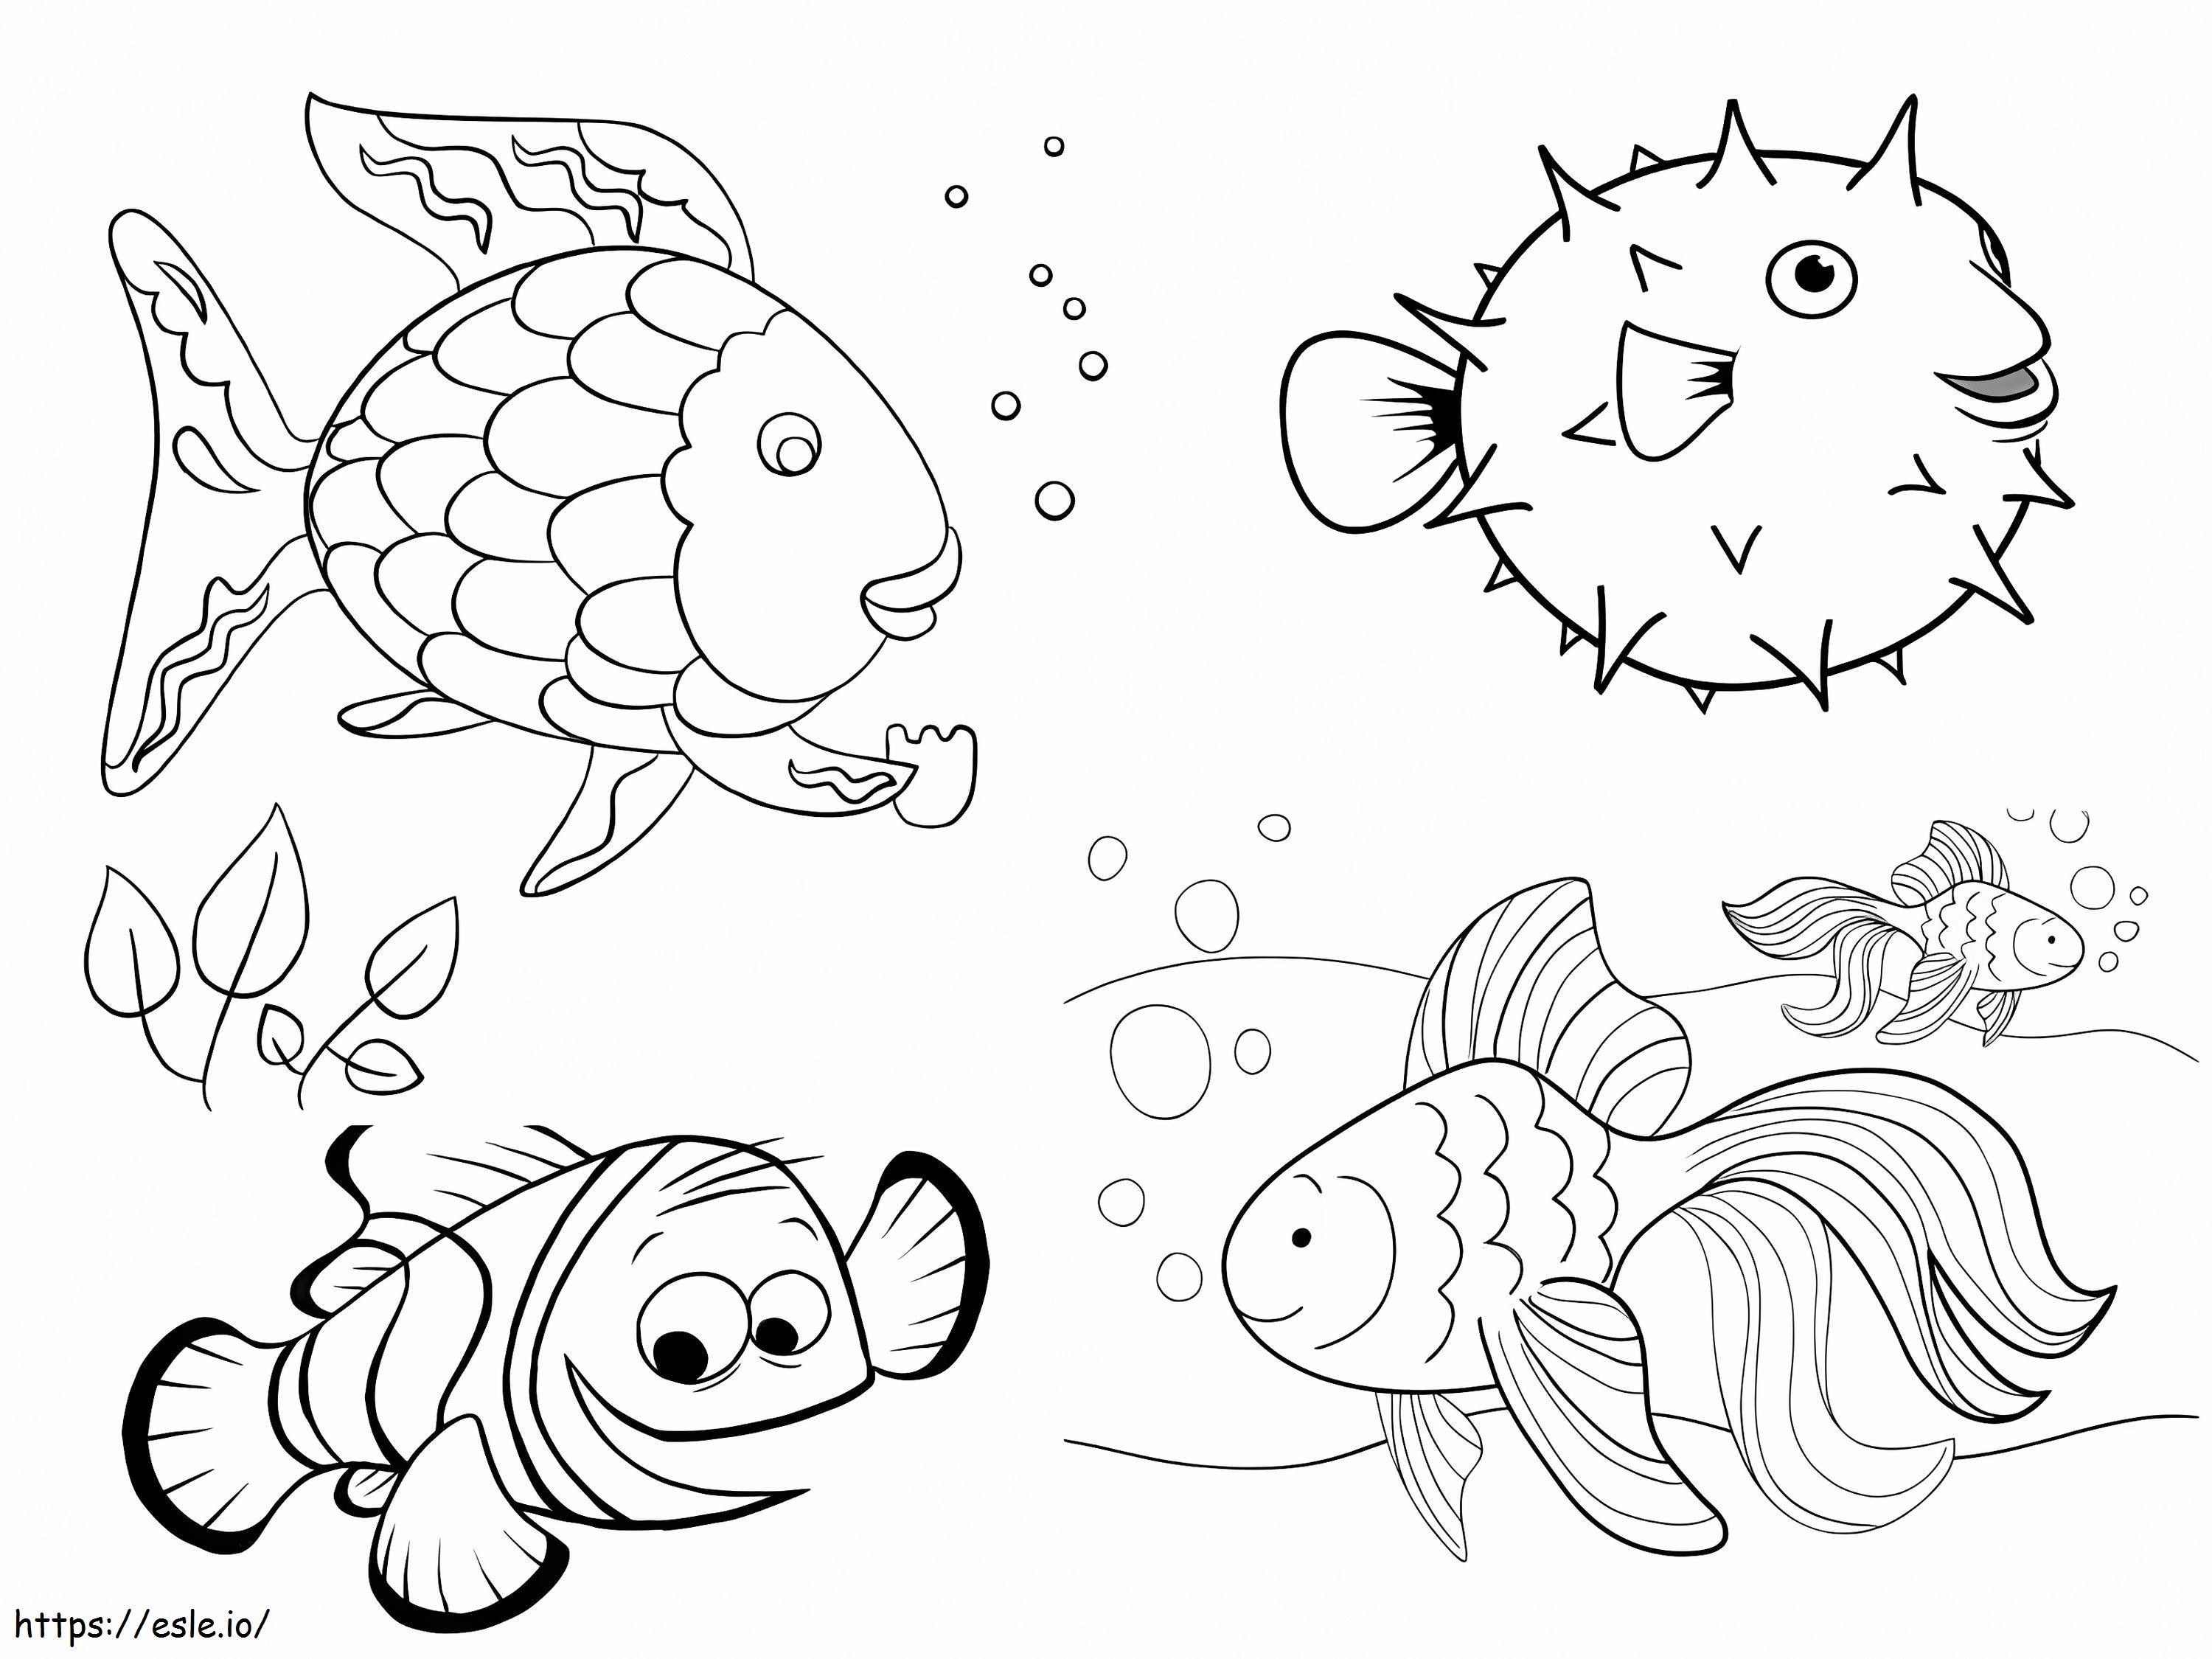 Peixe de desenho animado para colorir